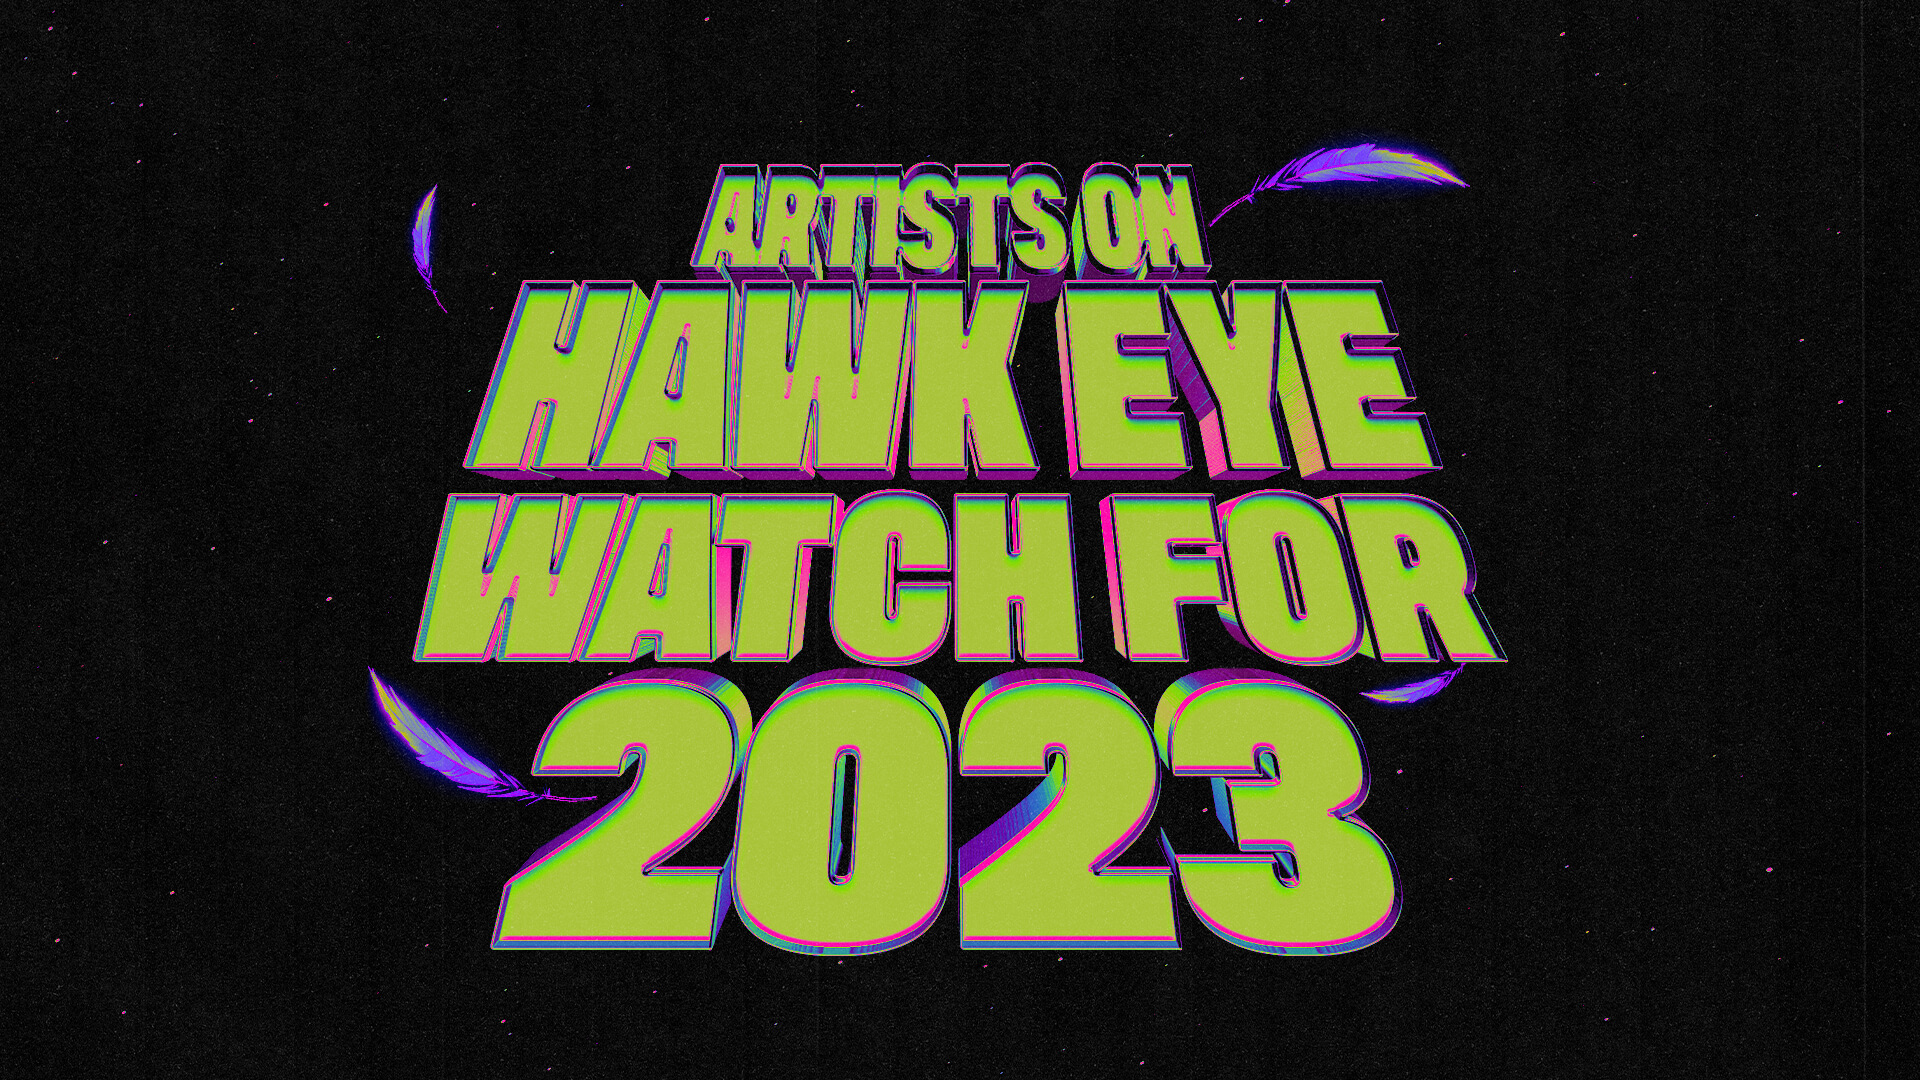 Electric Hawk: Artists On Hawk Eye Watch for 2023